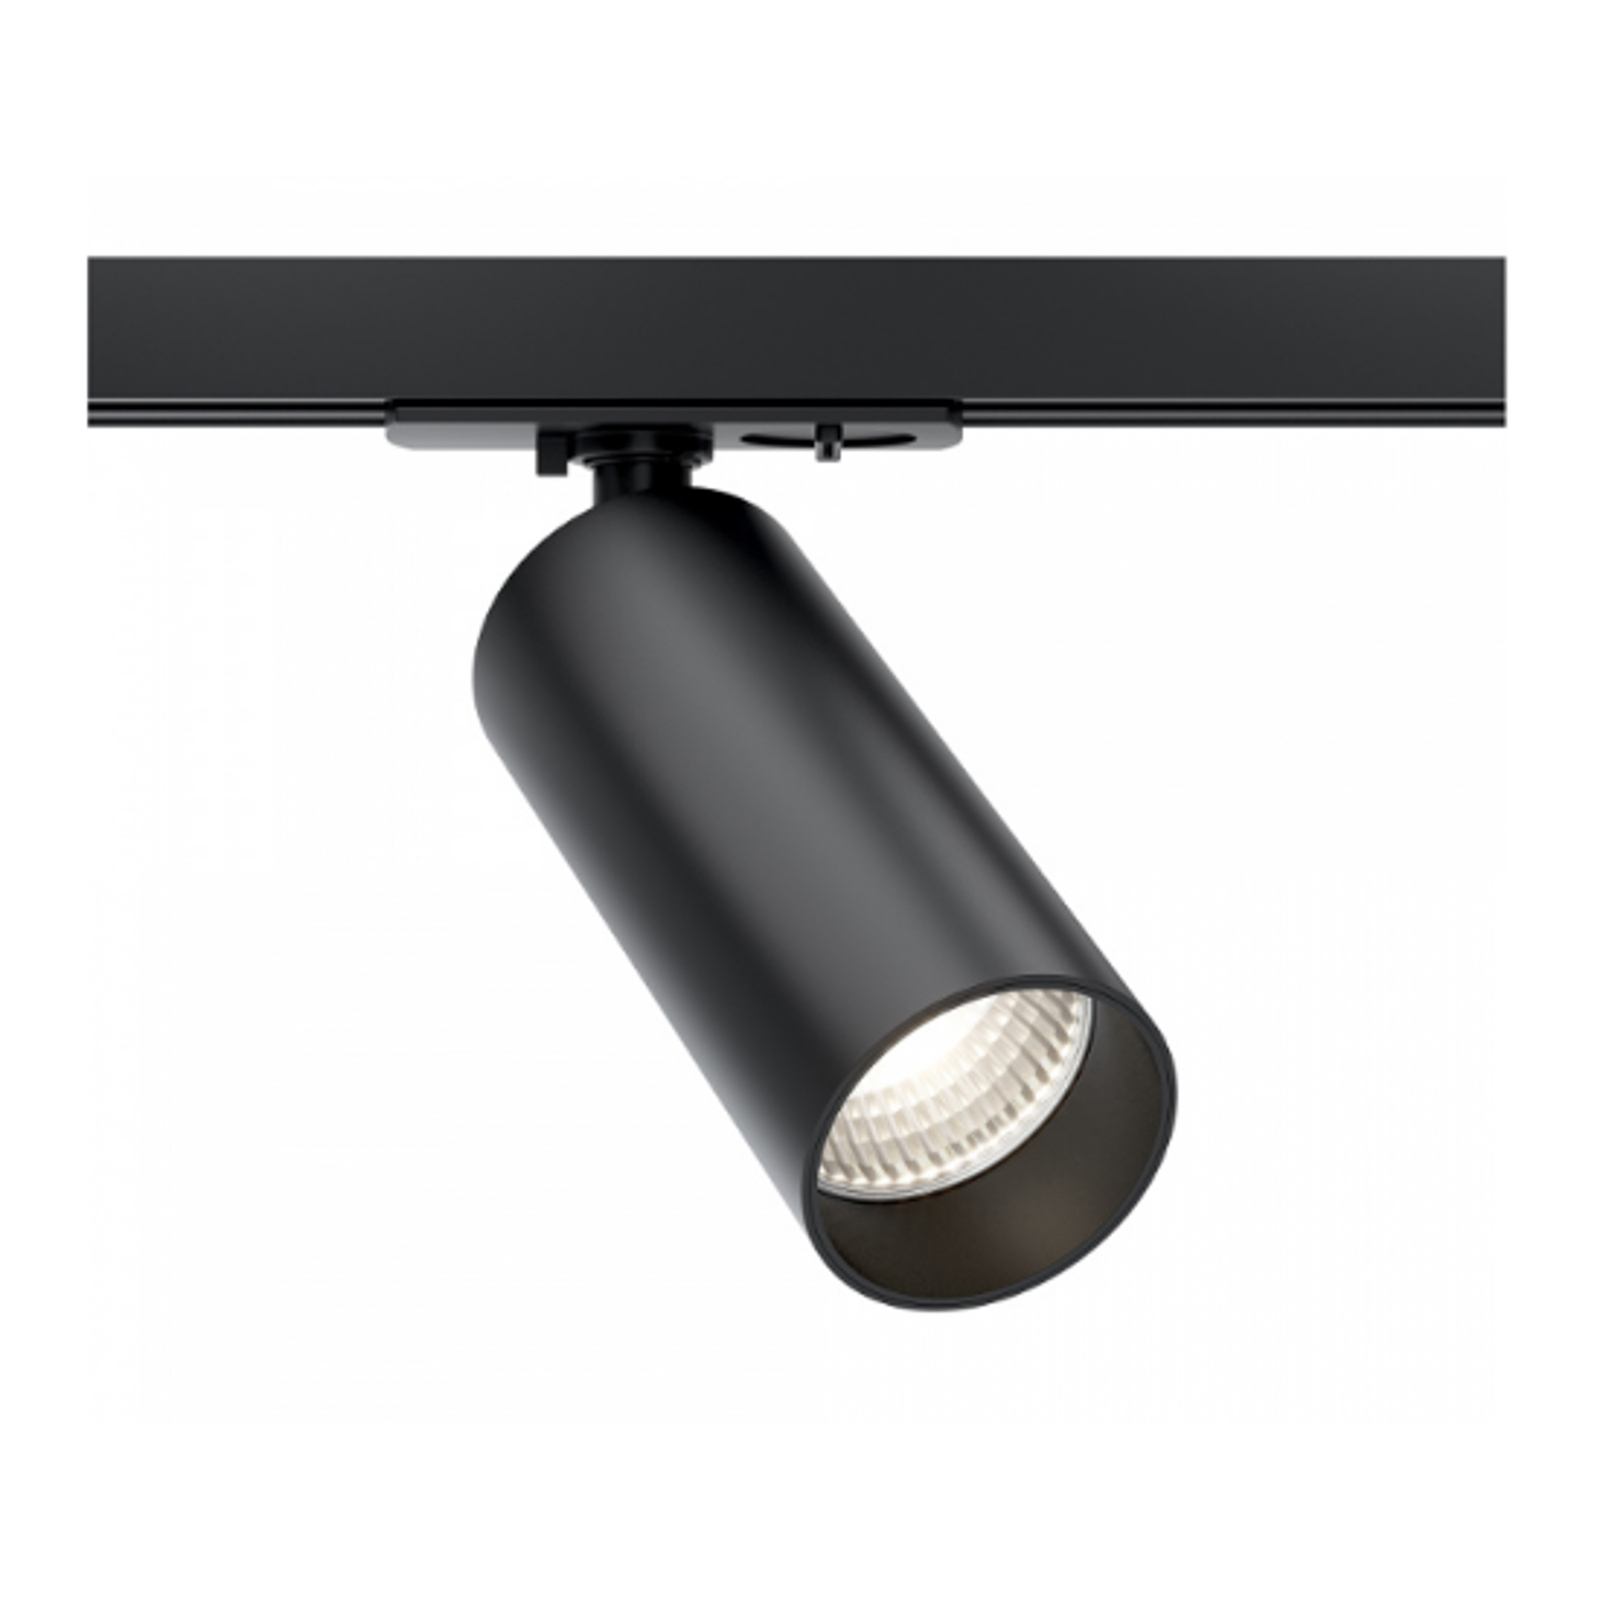 Maytoni Focus LED spot, Unity systeem, Triac, 940, zwart